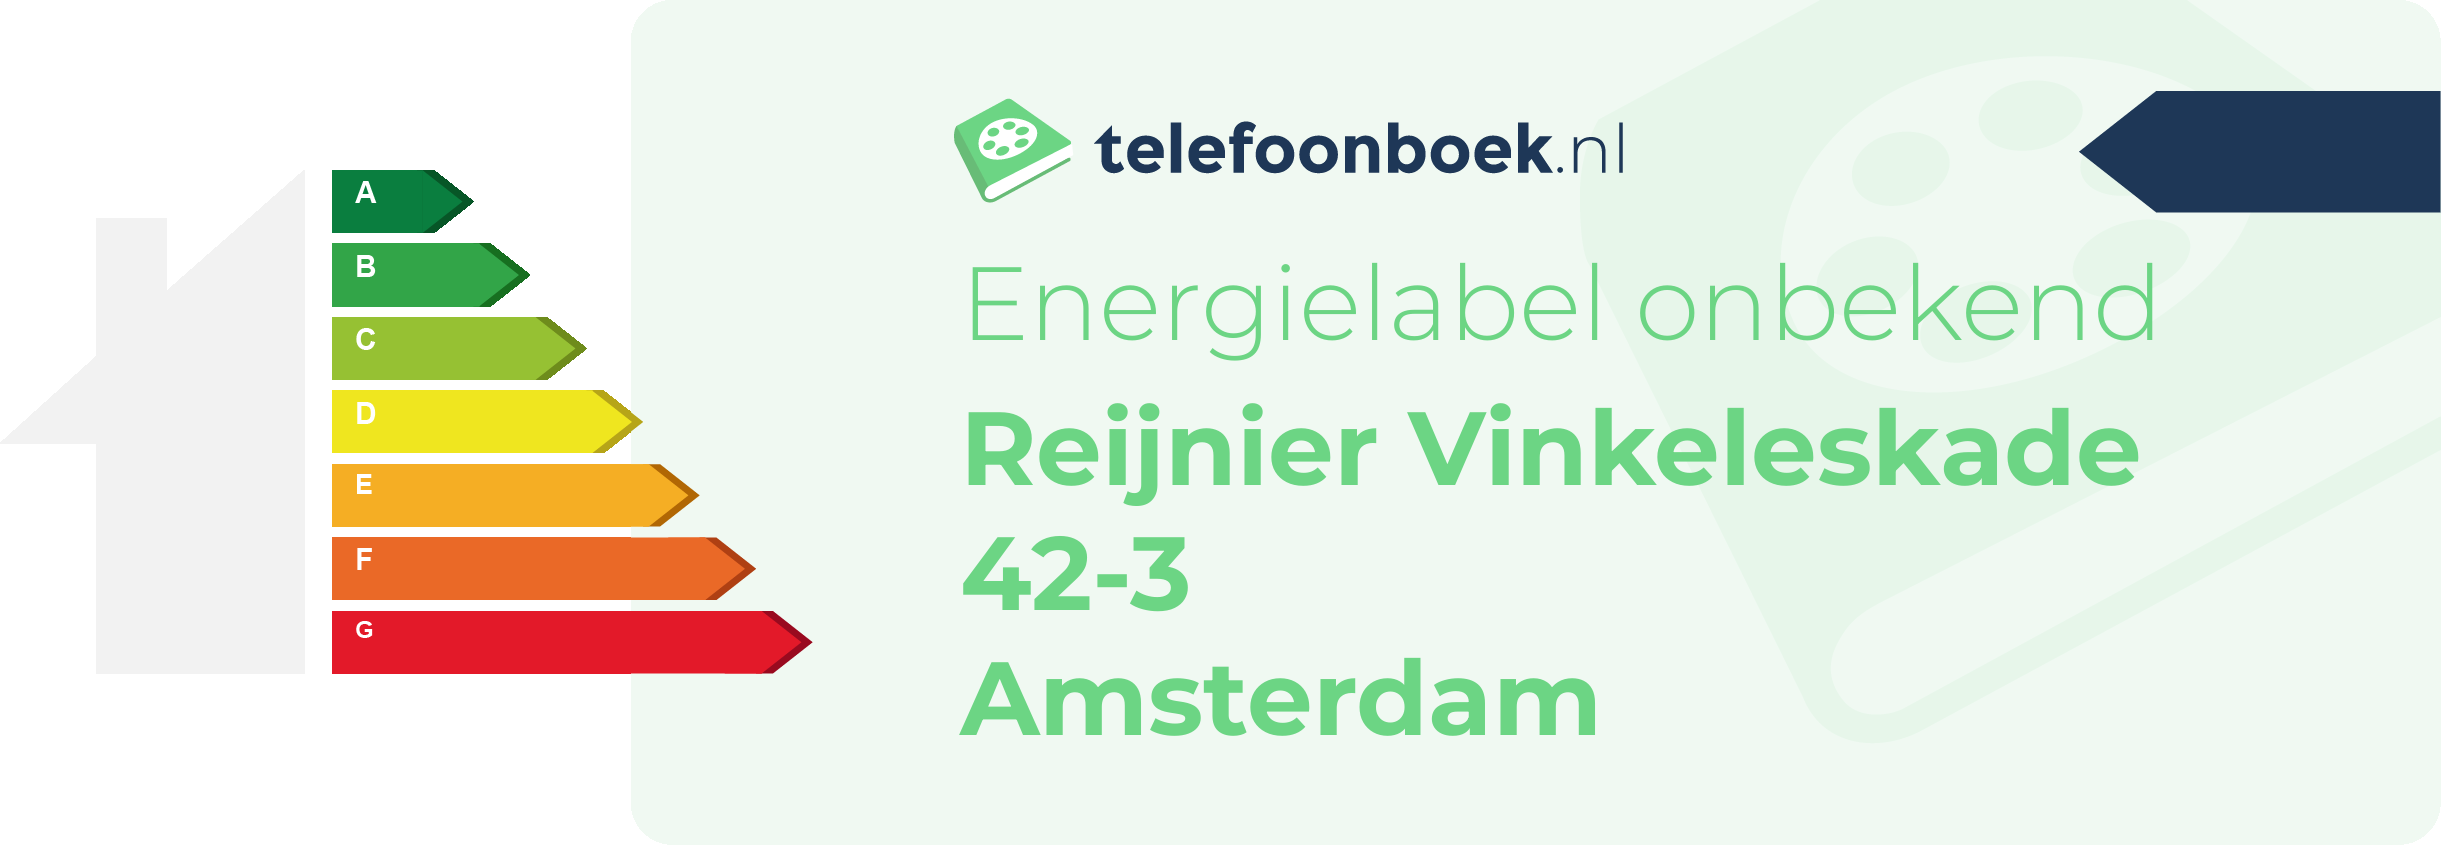 Energielabel Reijnier Vinkeleskade 42-3 Amsterdam